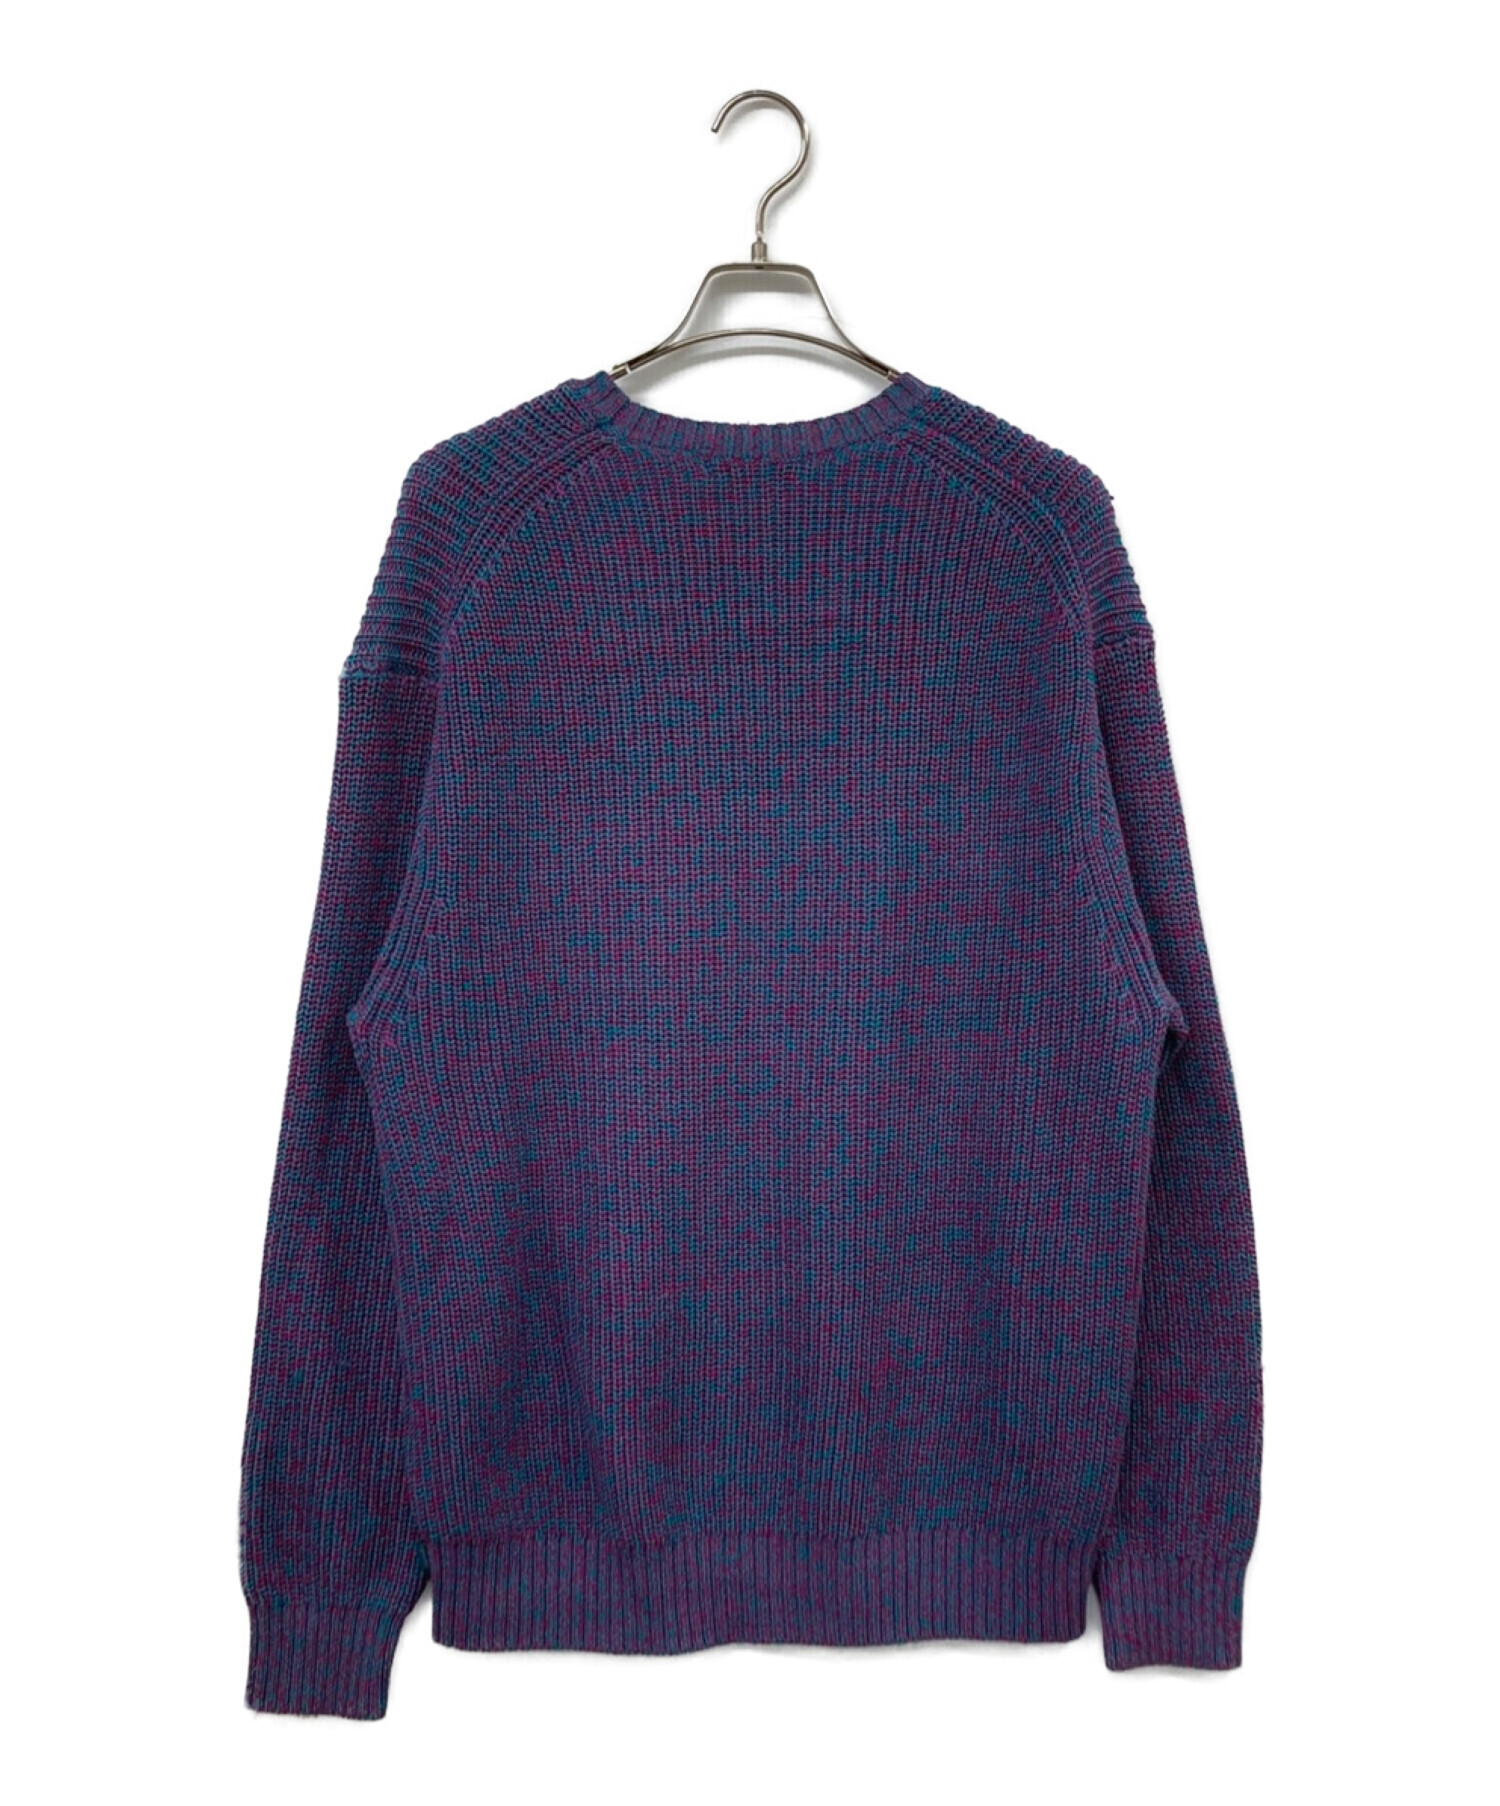 supreme knit sweater